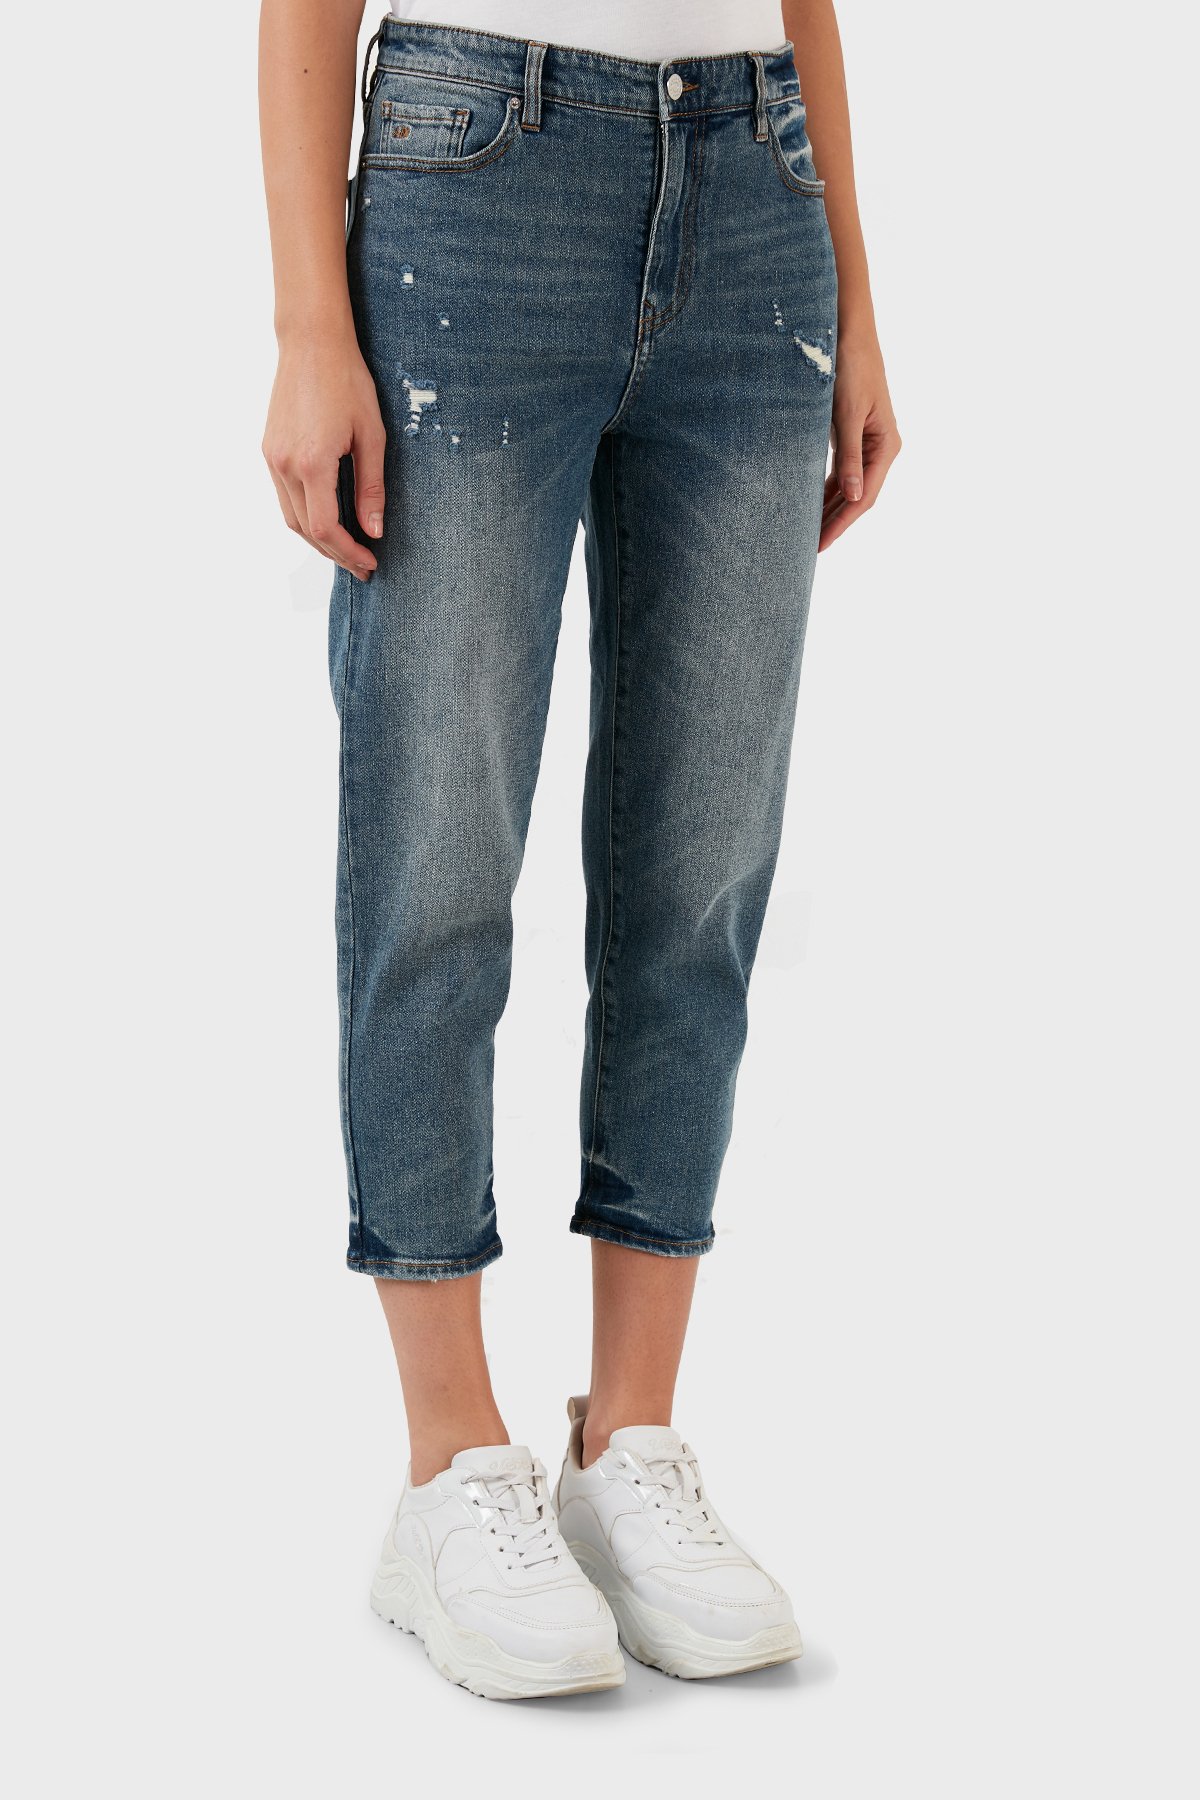 Armani Exchange J16 Pamuklu Yüksek Bel Kısa Paça Jeans Bayan Kot Pantolon 6LYJ16 Y1HPZ 1500 AÇIK MAVİ